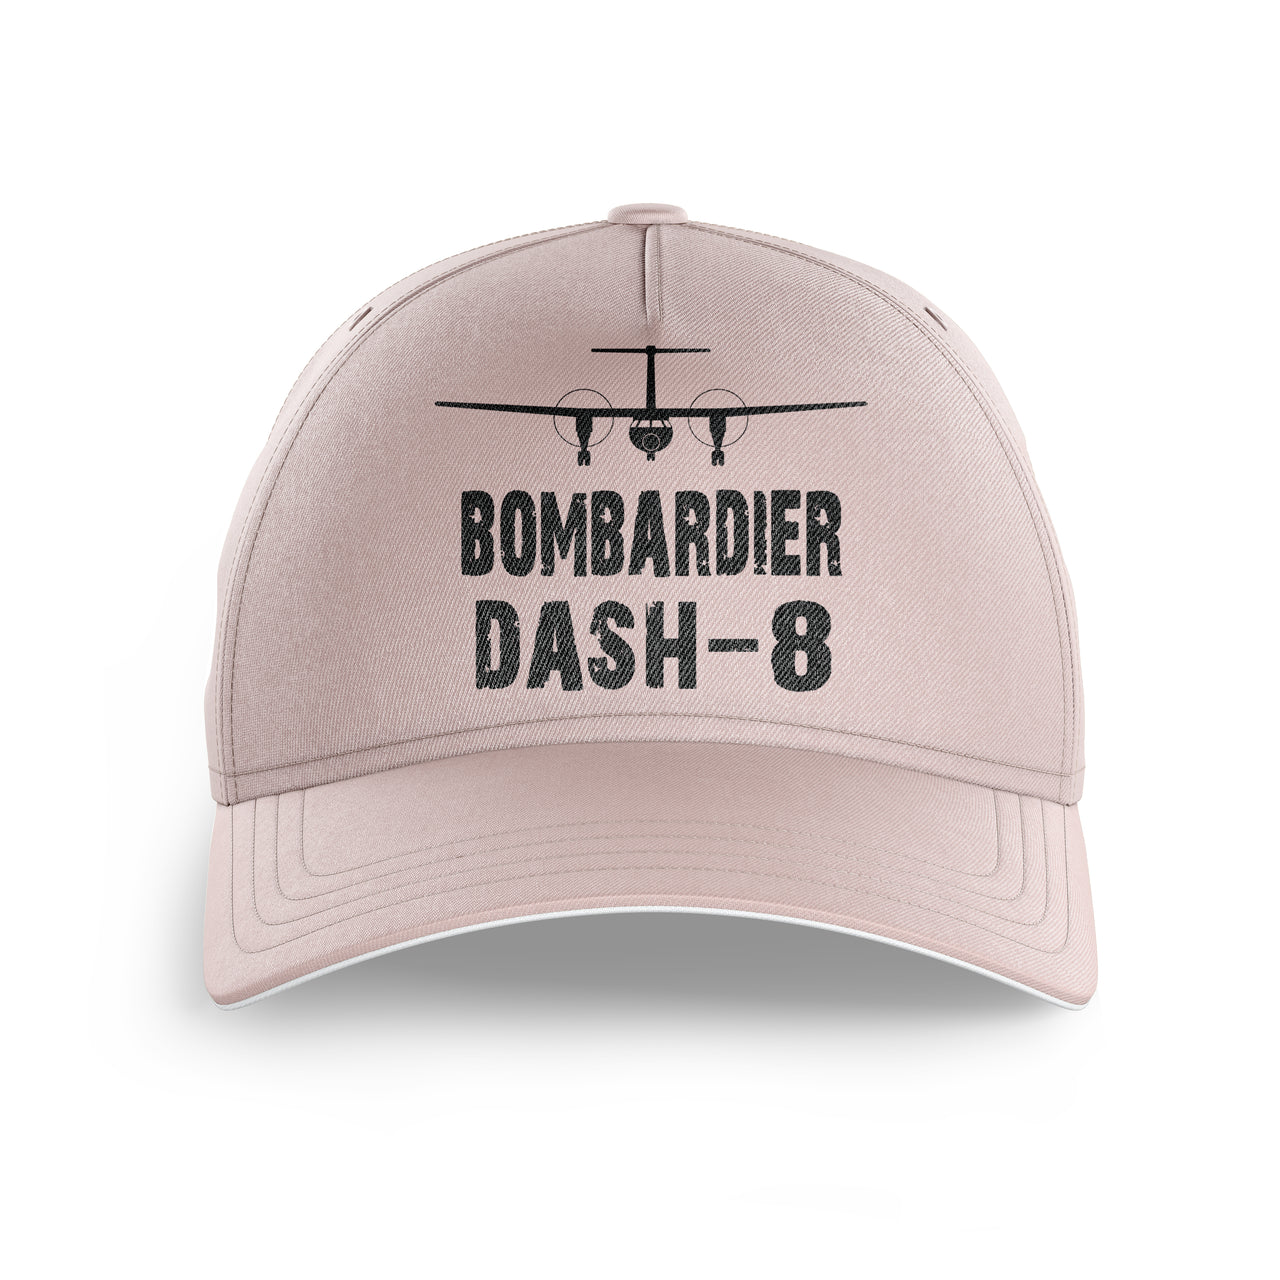 Bombardier Dash-8 & Plane Printed Hats